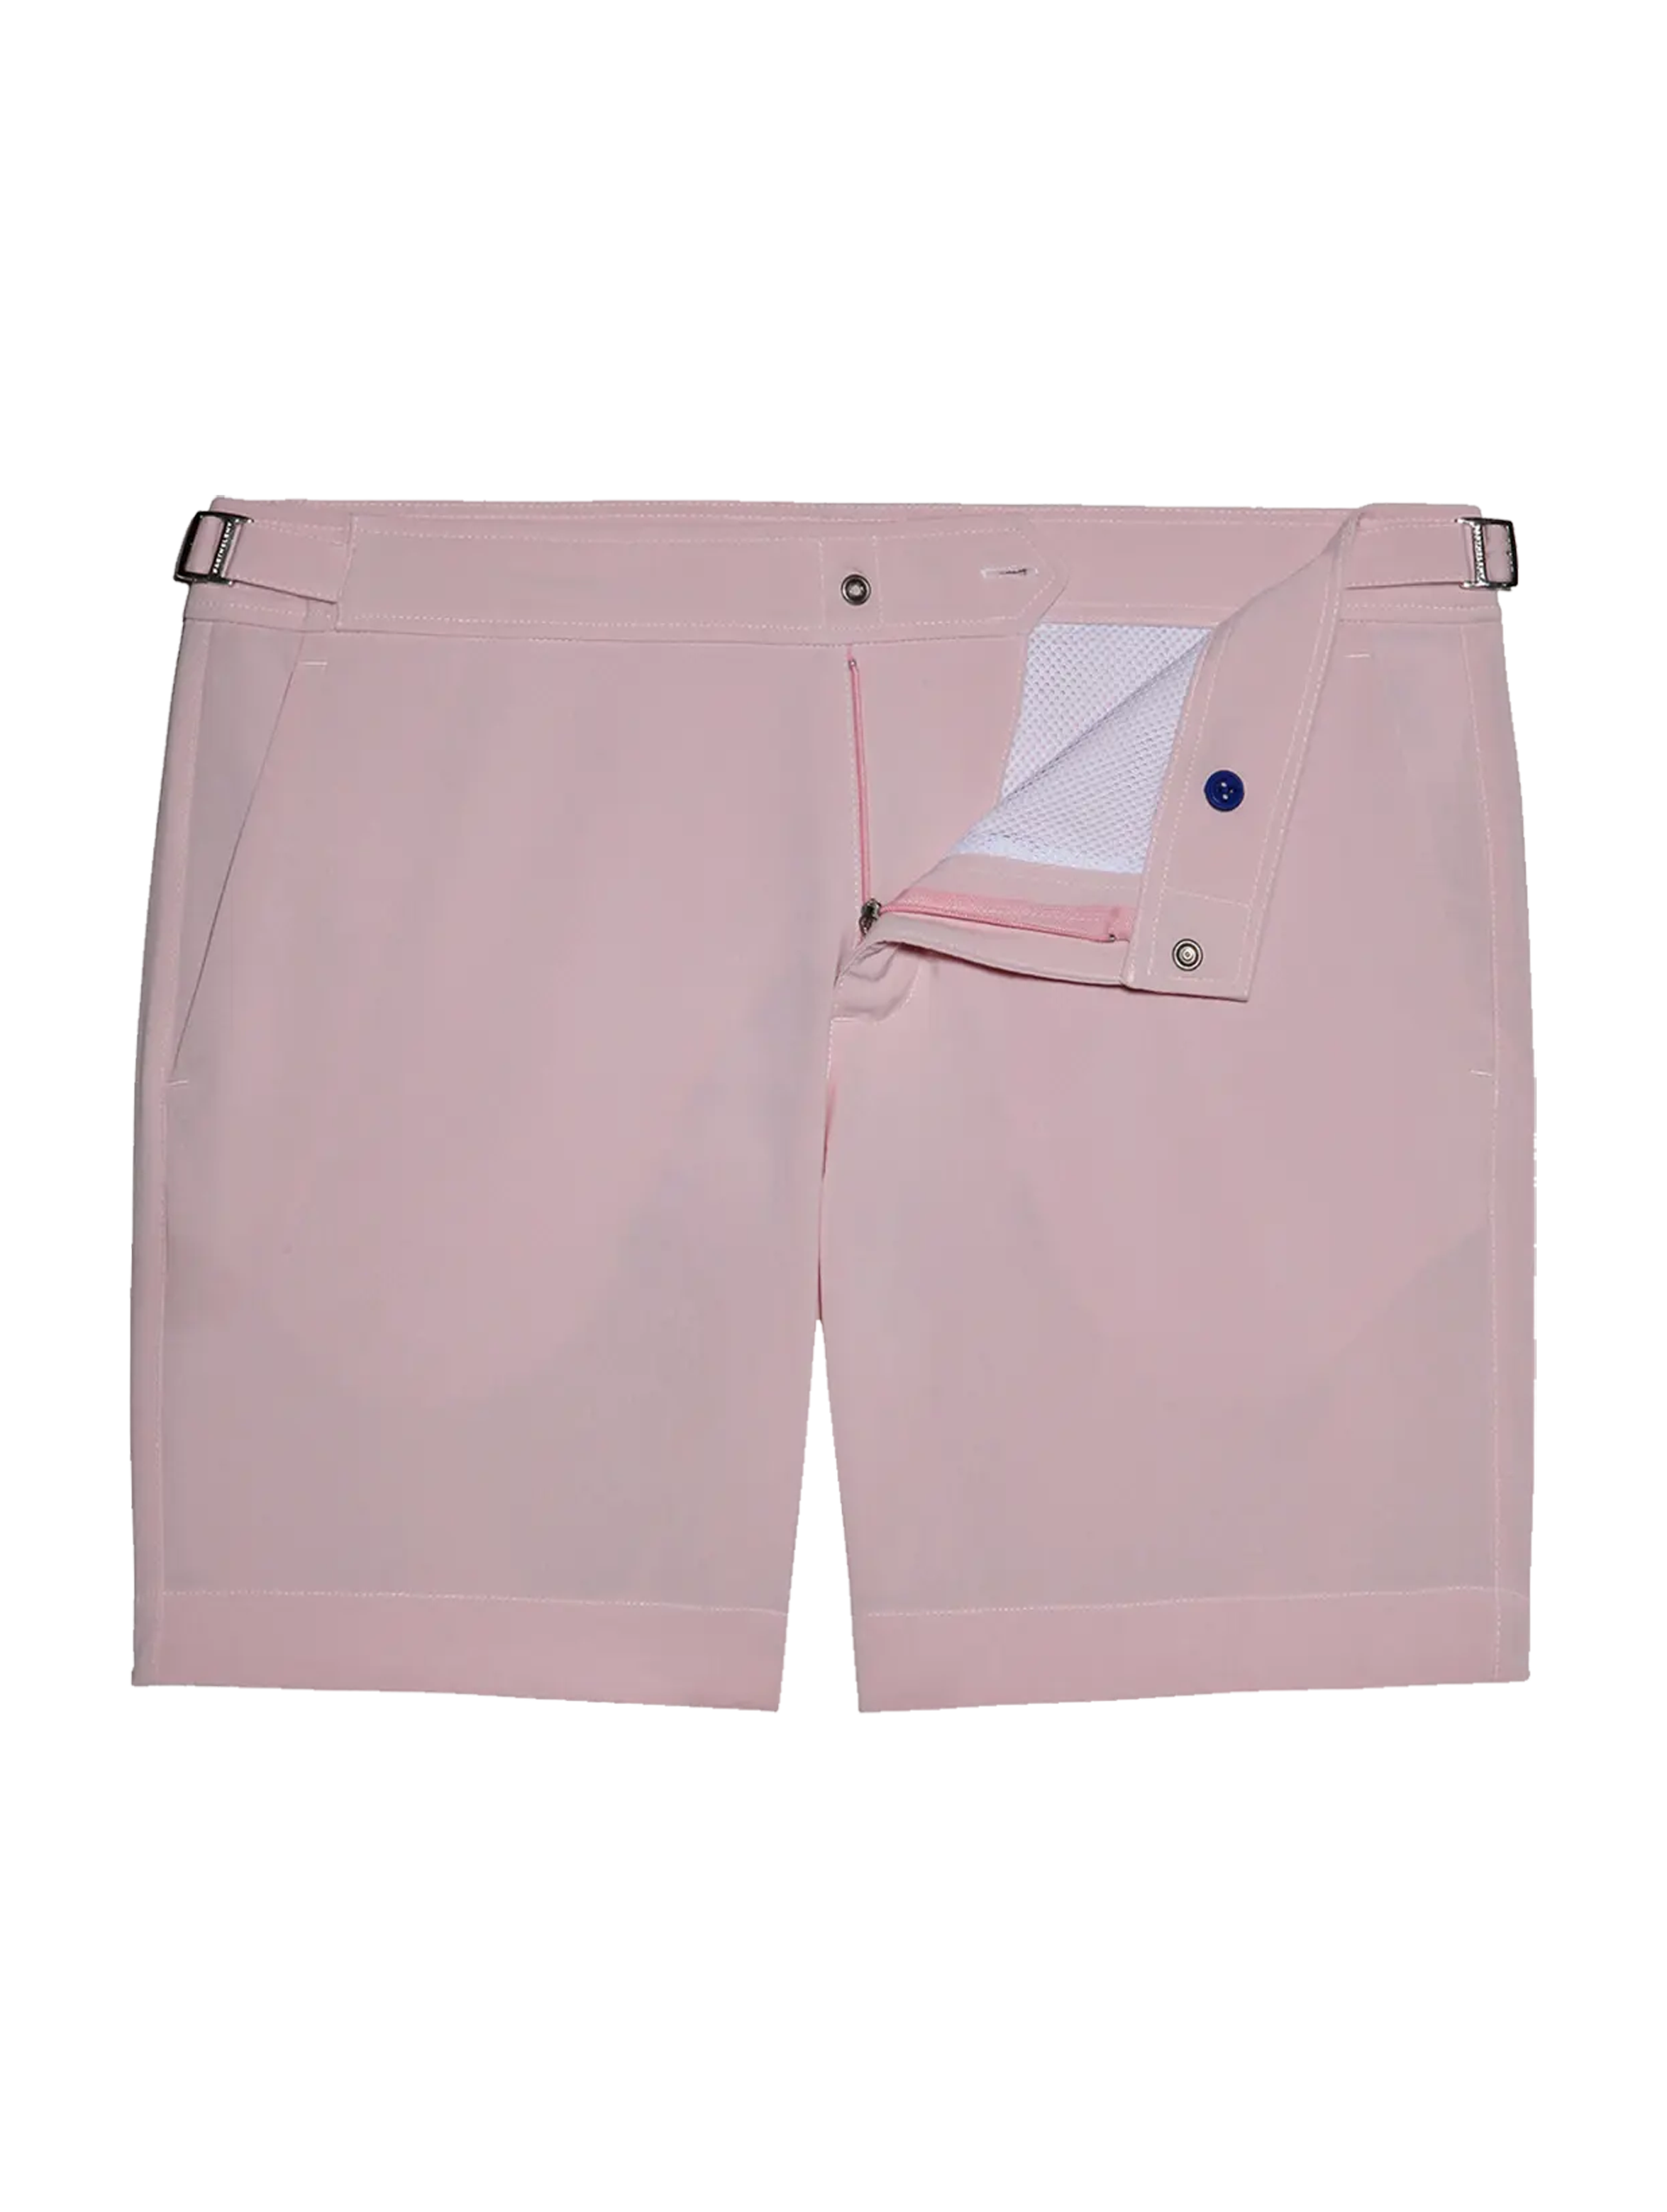 Shorts de Banho Saline Sport Fairy Pink